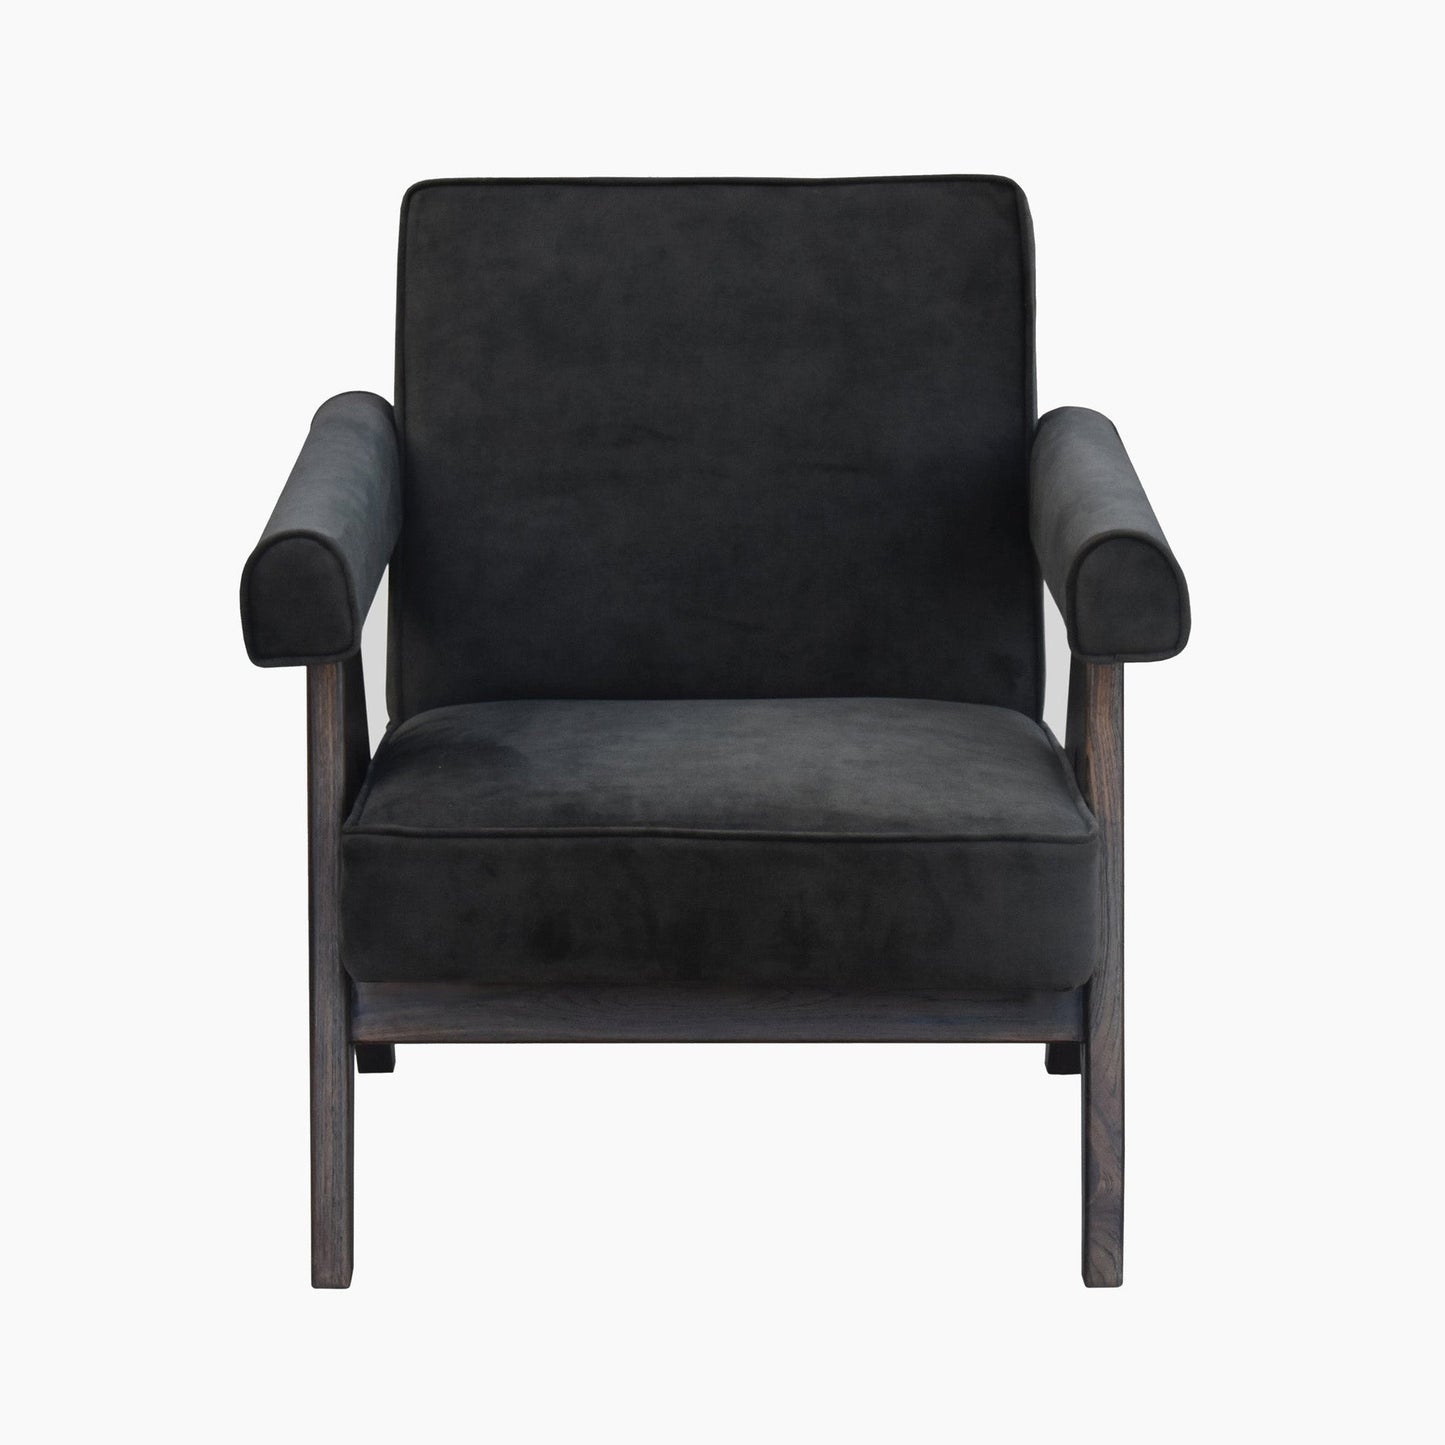 Jeanneret Senate Lounge Chair - Floor Model - Grade A